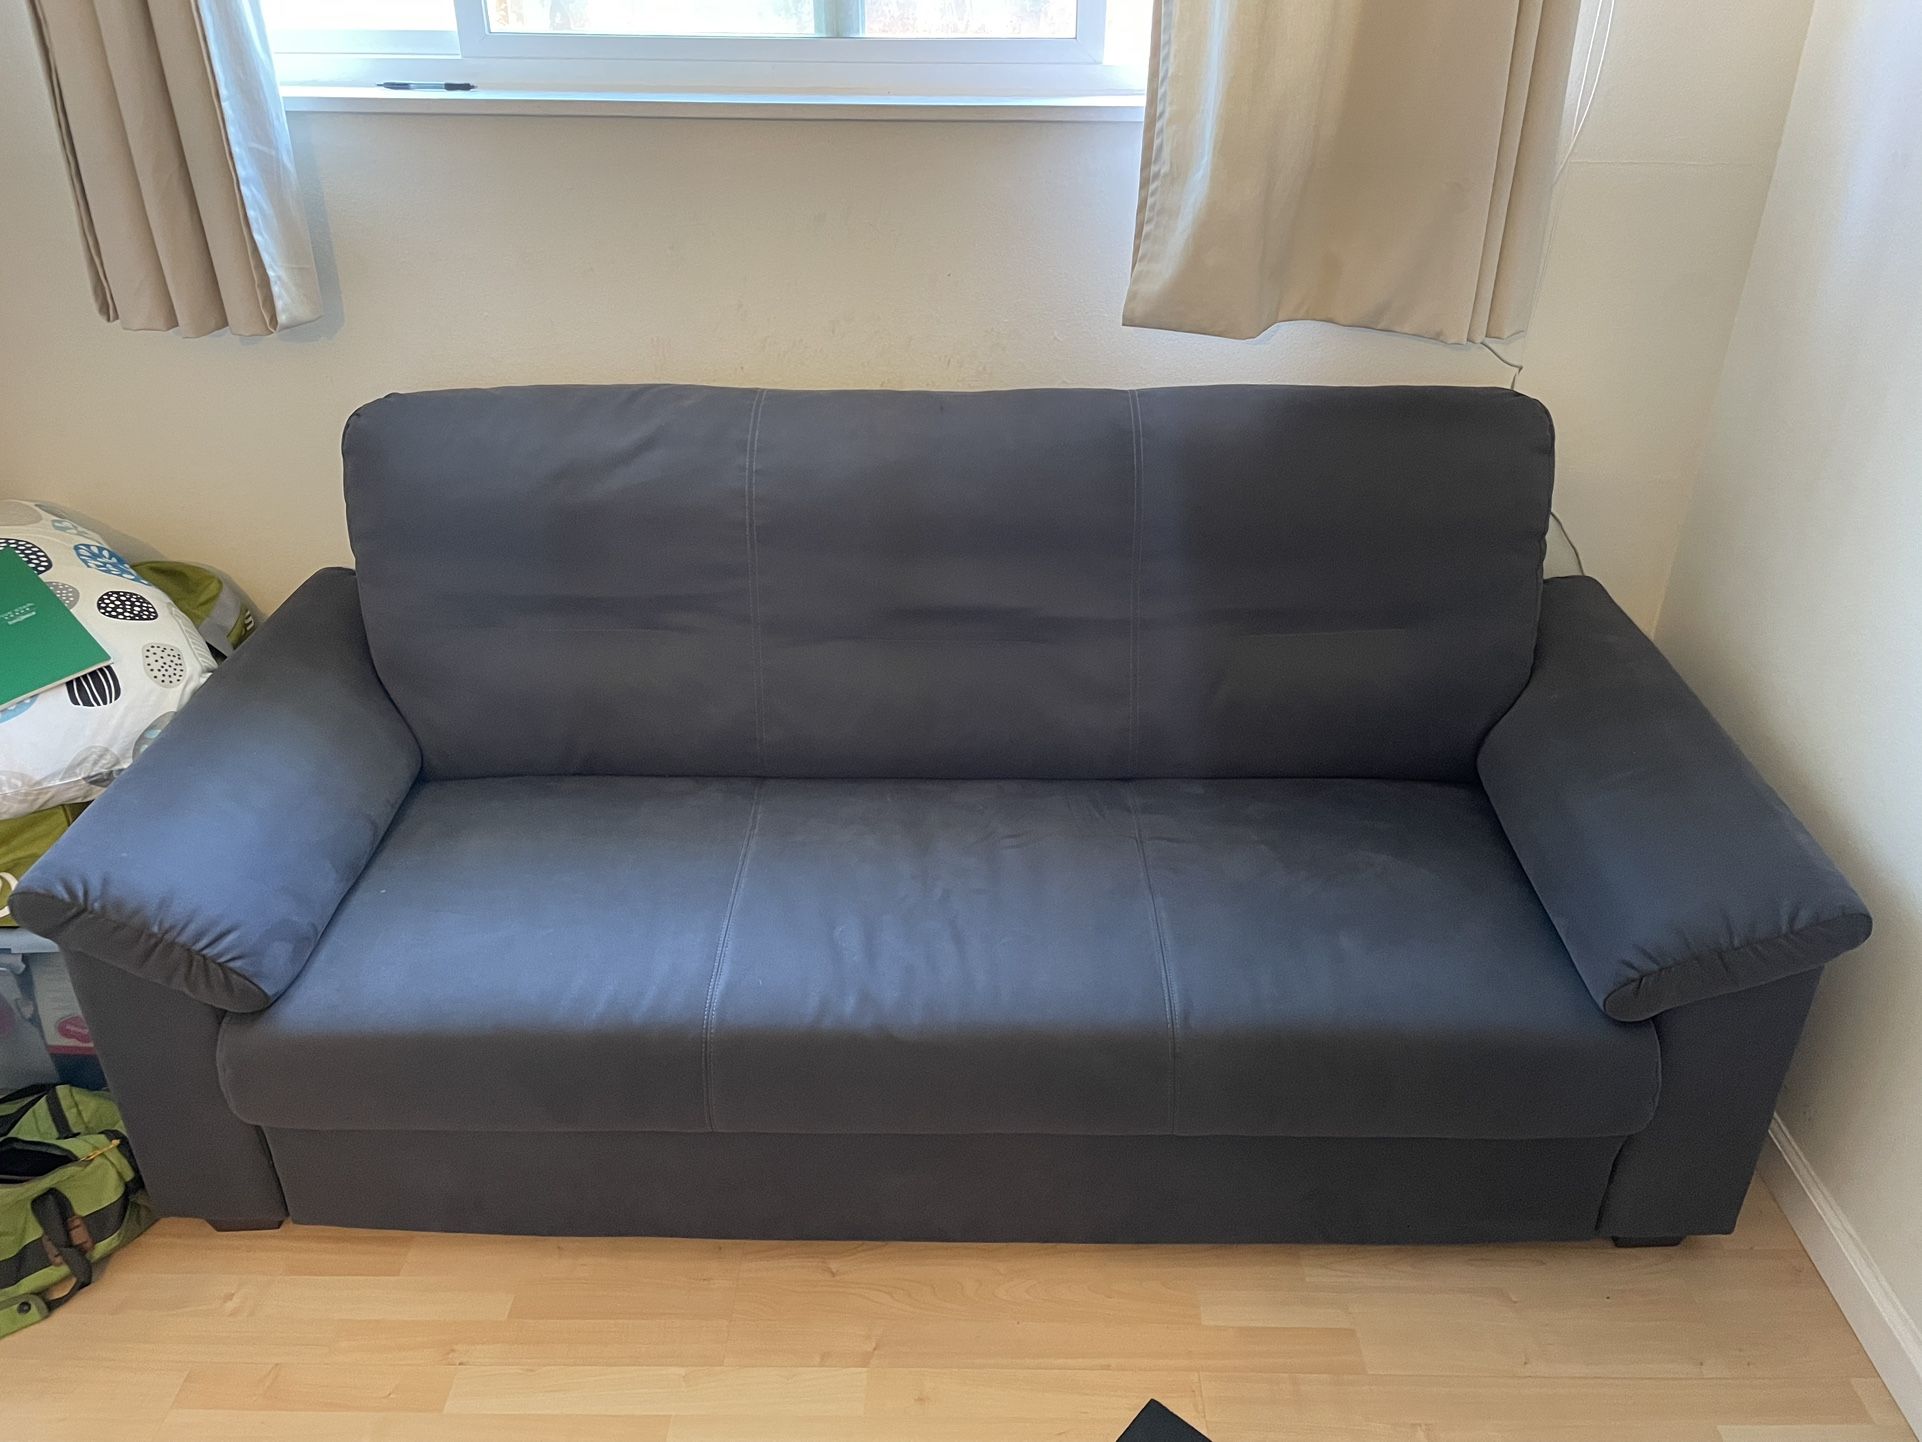 IKEA Knislinge Sofa